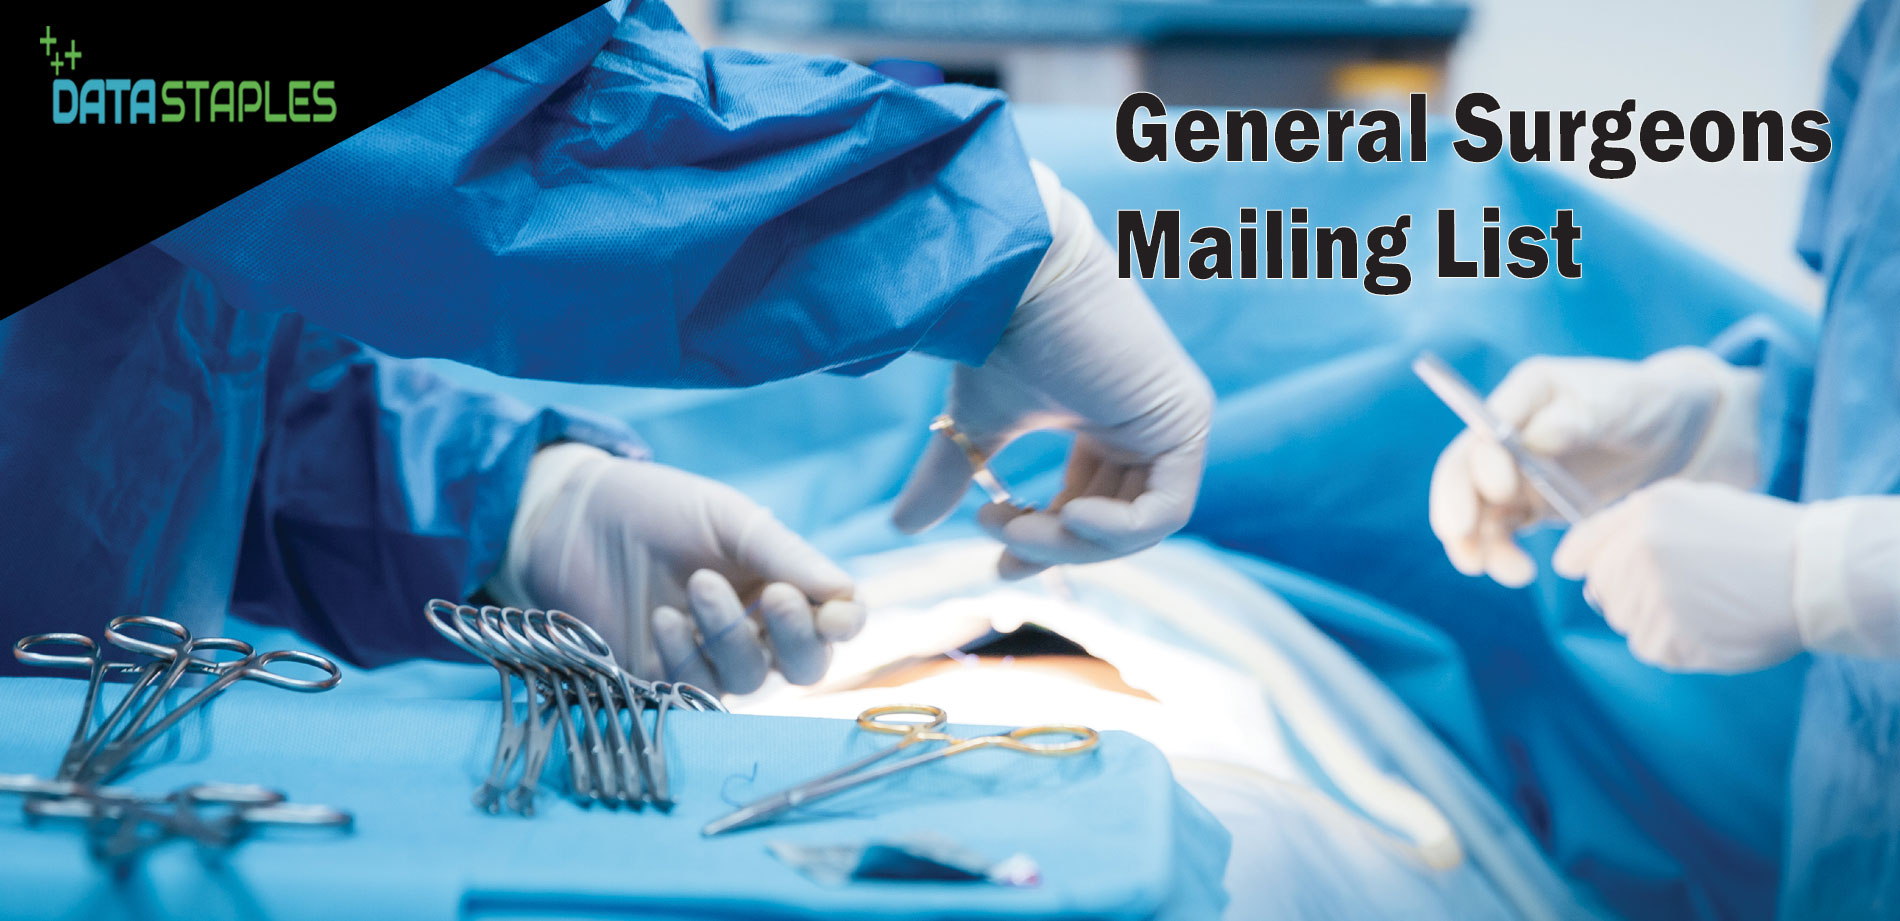 General Surgeons Mailing List | DataStaples